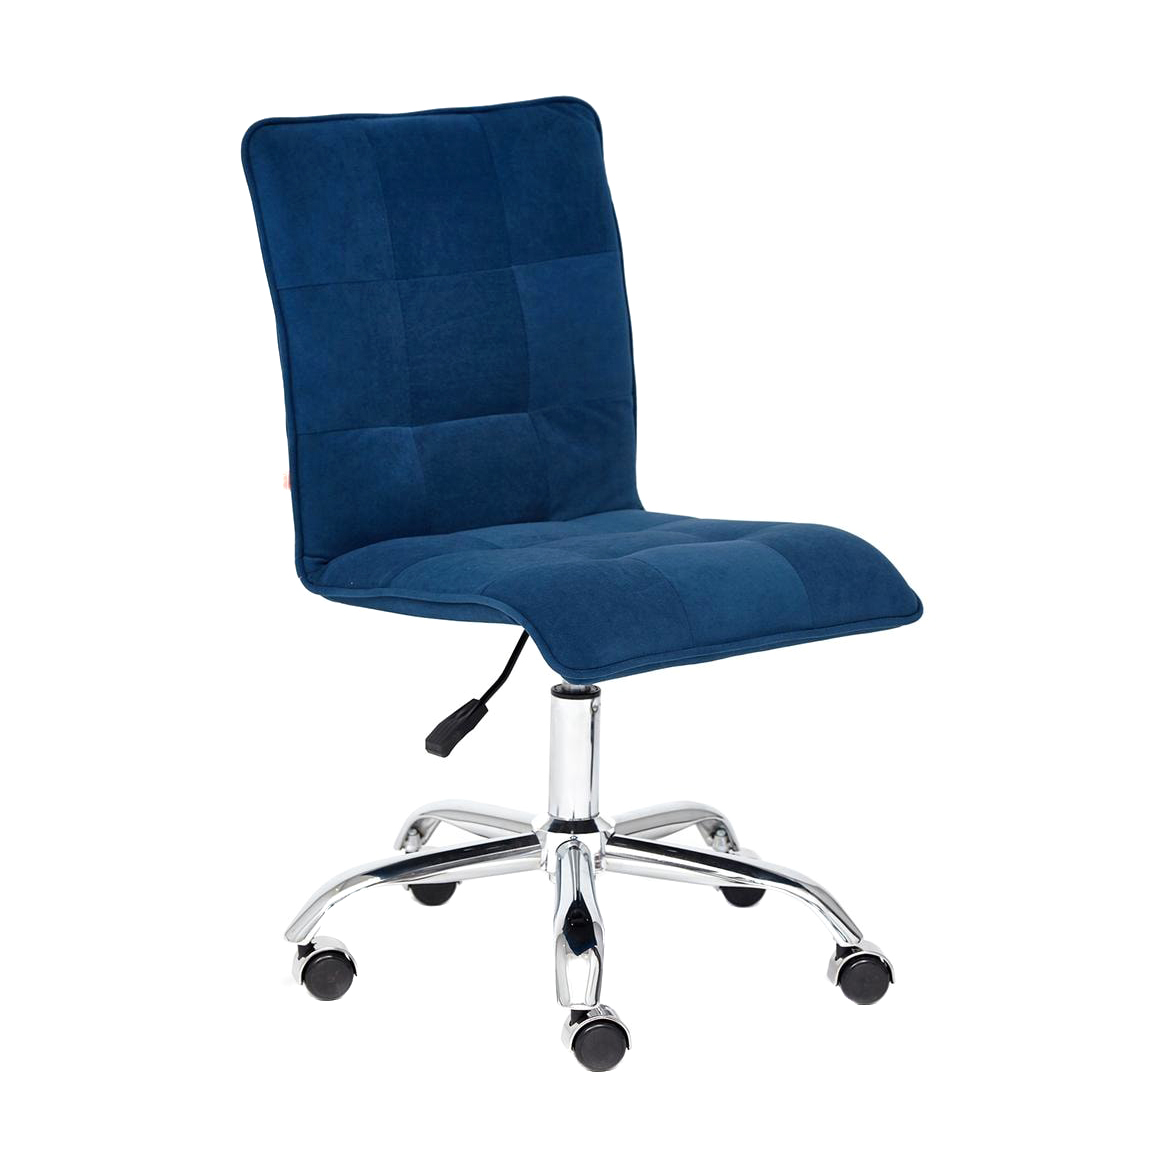 Кресло офисное TC до 100 кг 96х45х40 см синий кресло офисное tc до 100 кг 96х45х40 см молочный